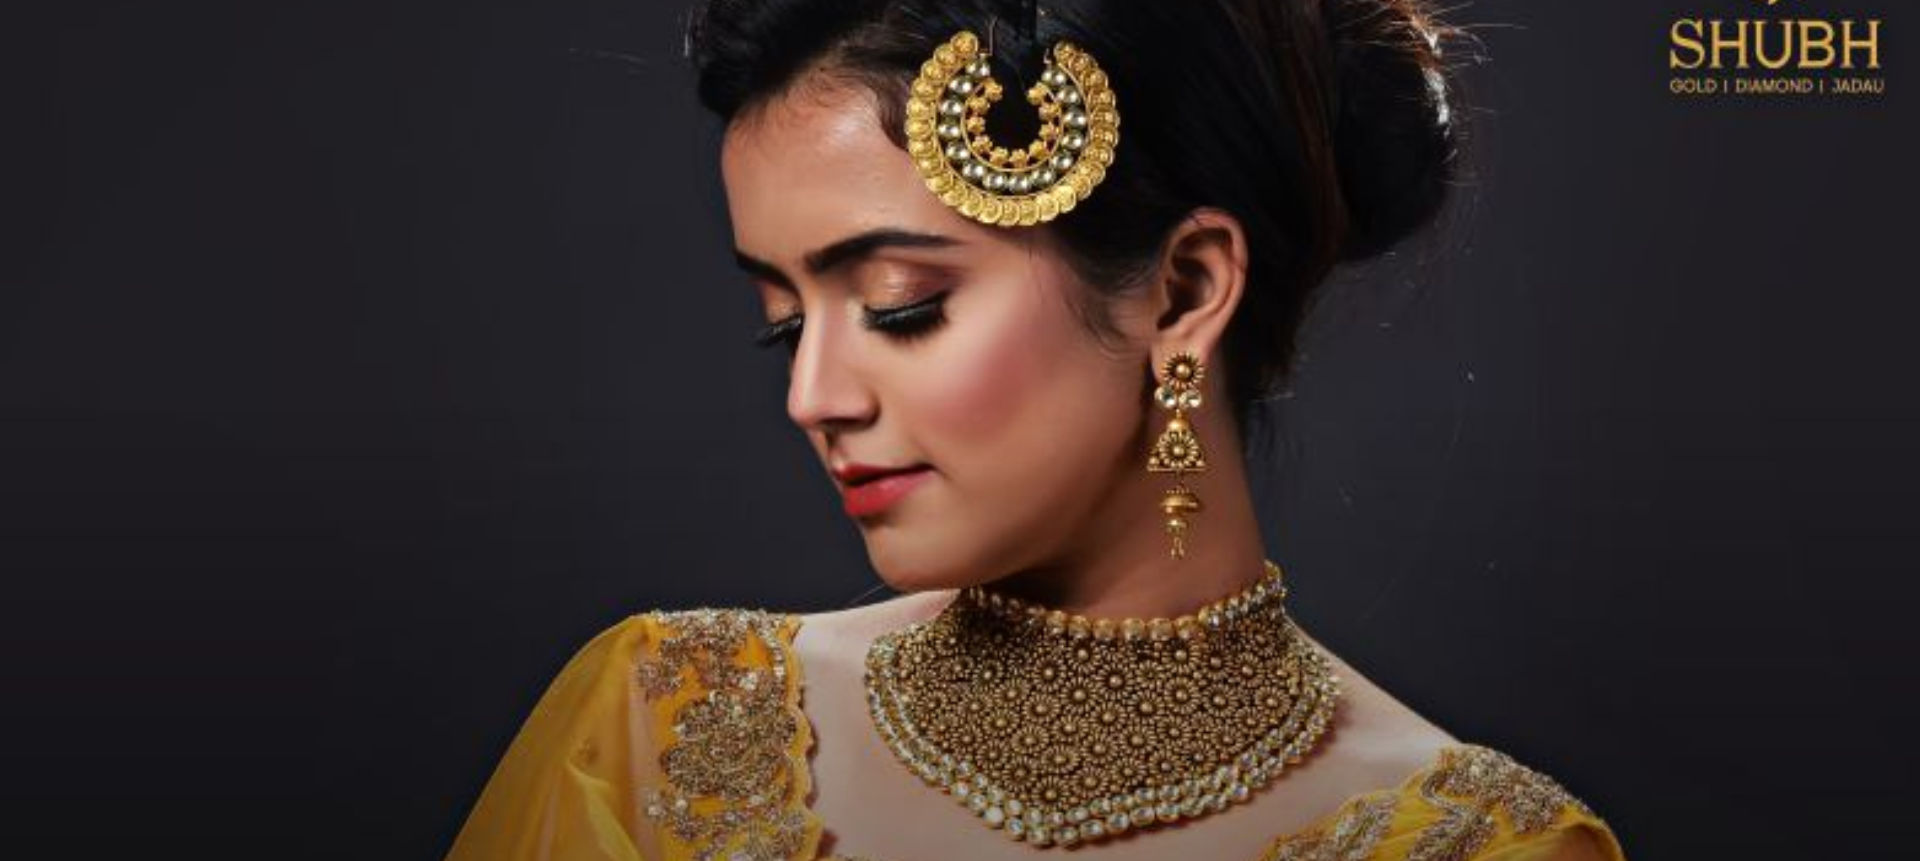 shubh jewellers- jewellery brands in India